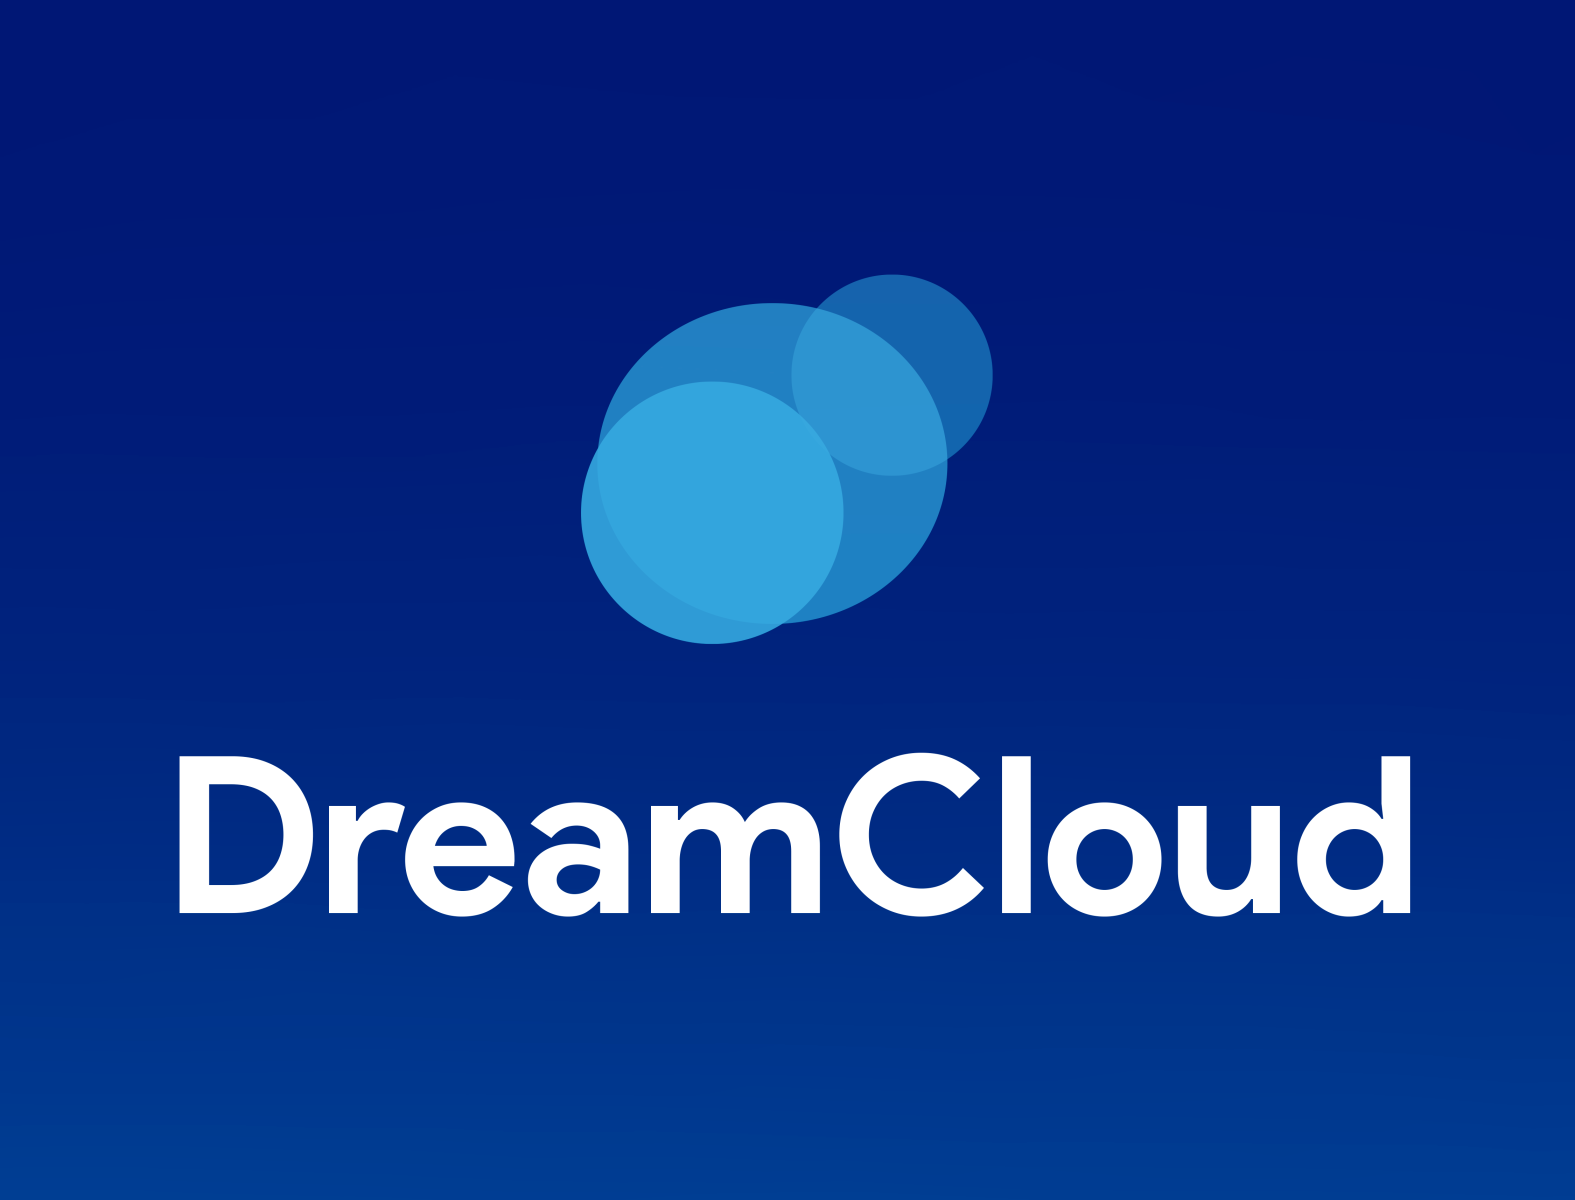 DreamCloud by Simon Berner on Dribbble